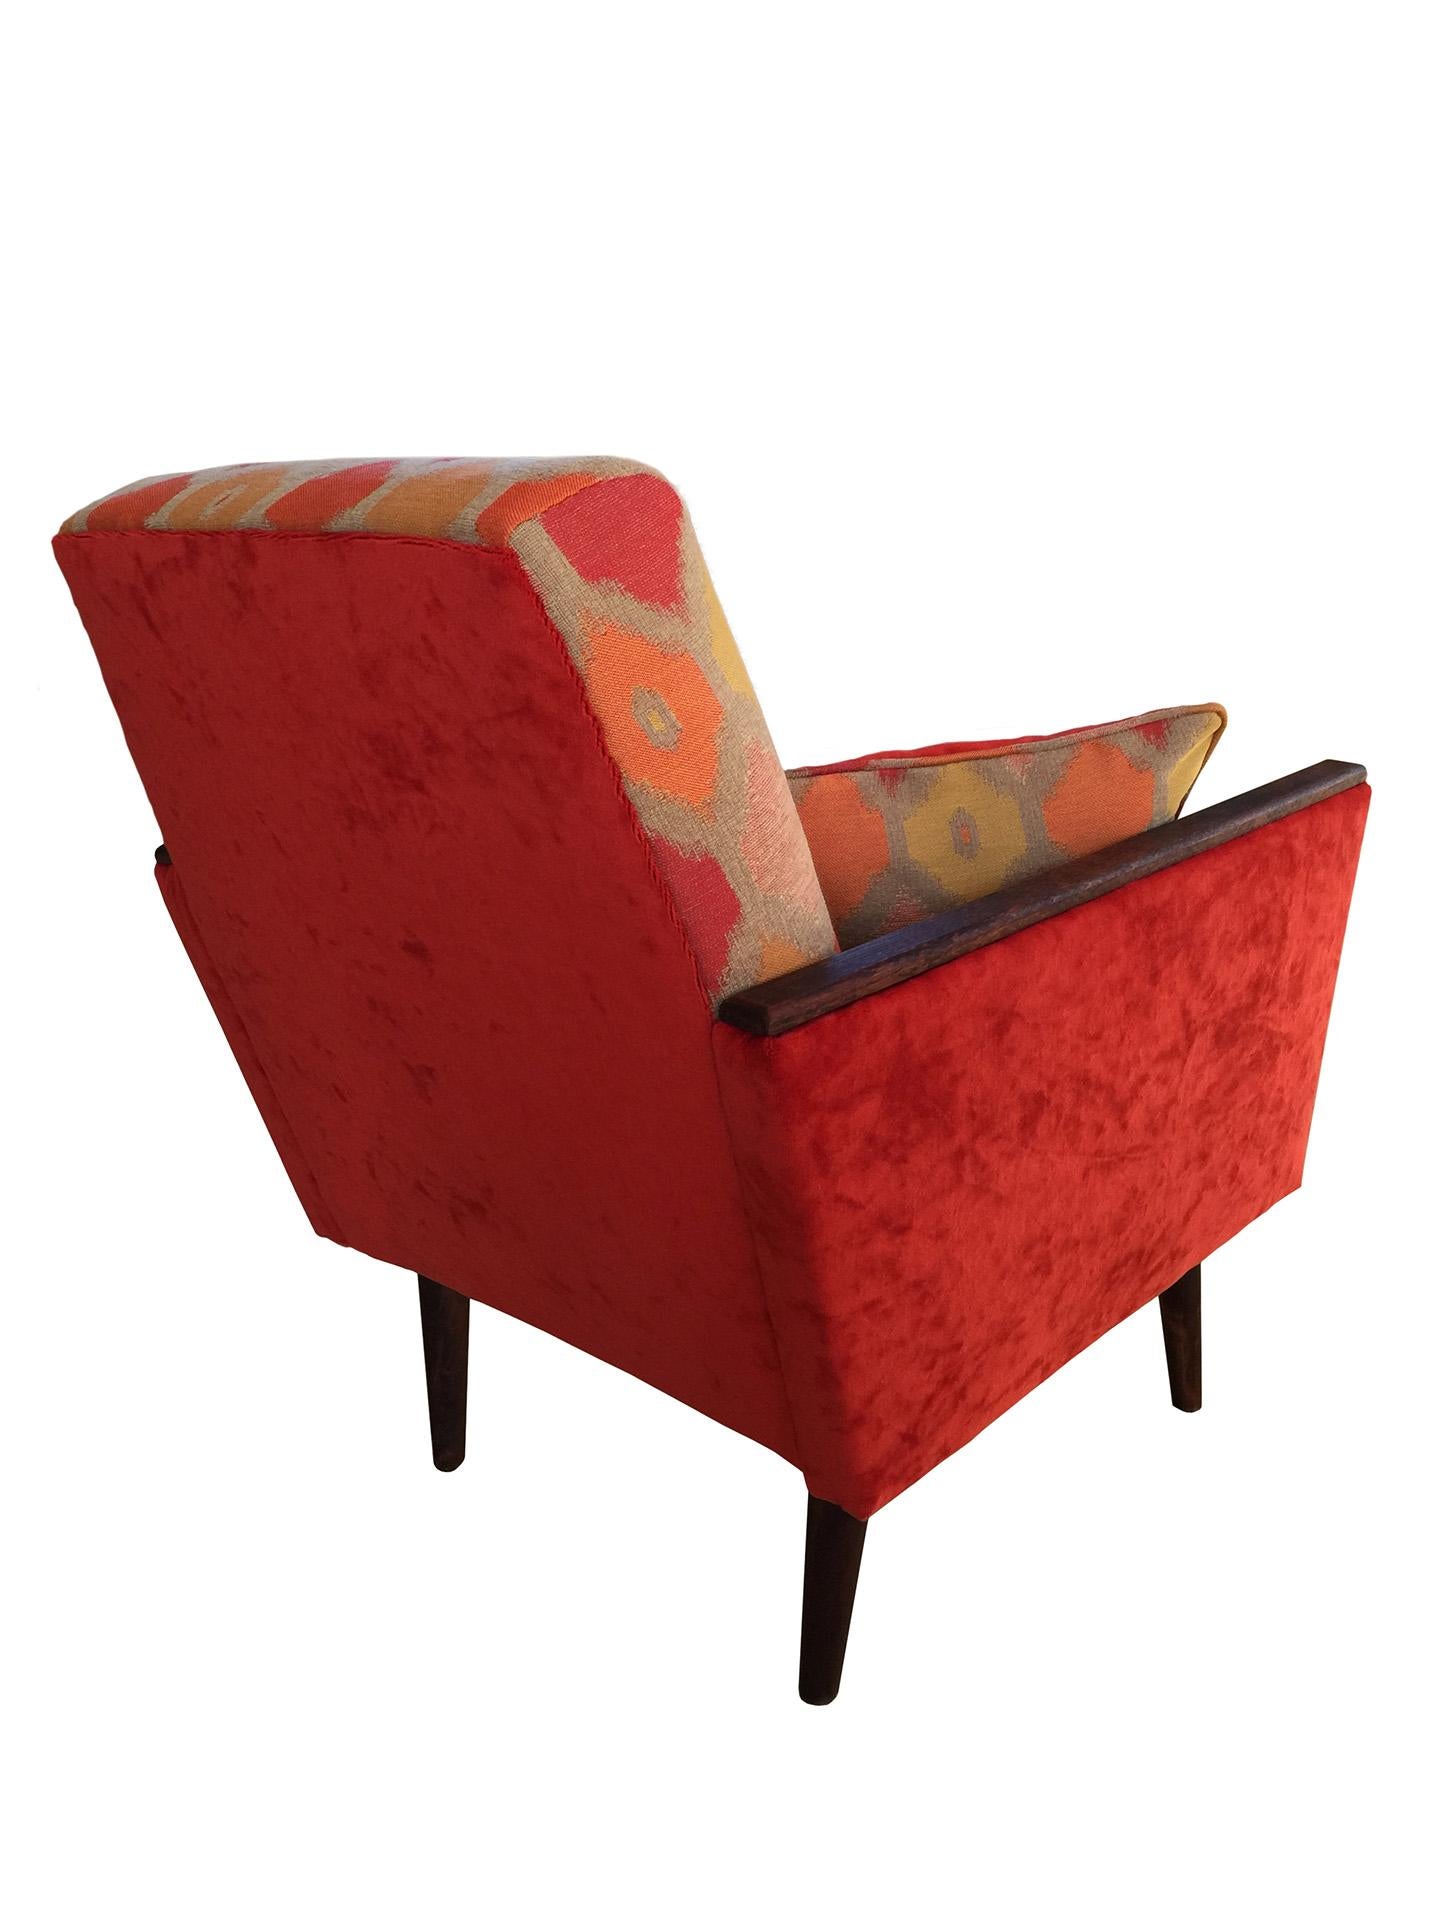 20th Century Mid-Century Modern Lounge Armchair in Orange, 1970s For Sale